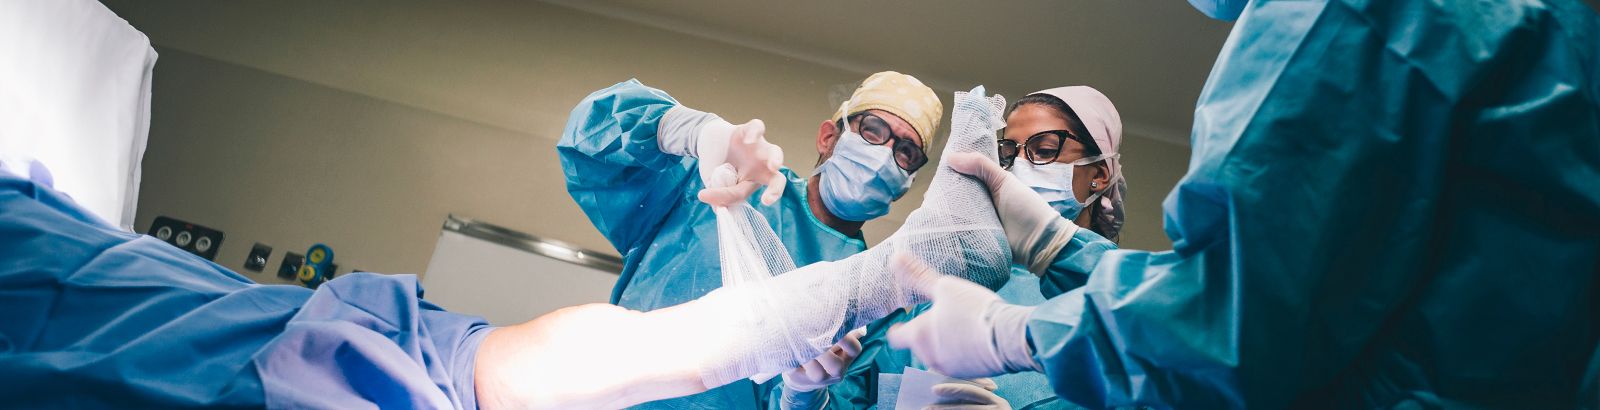 Orthopaedic surgical procedures